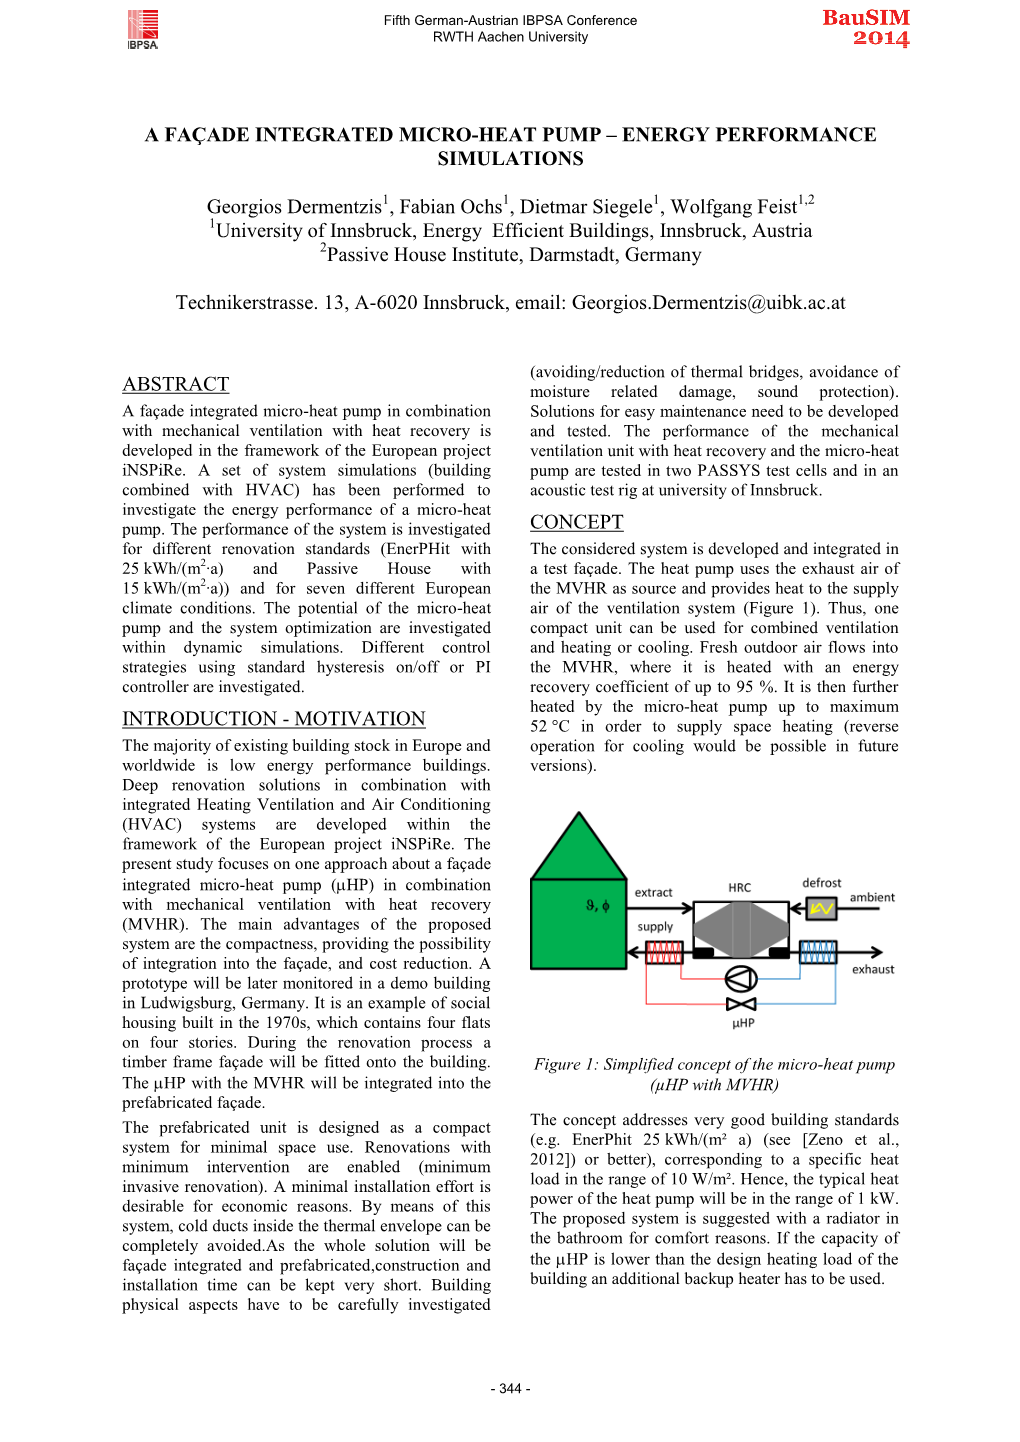 A Façade Integrated Micro-Heat Pump – Energy Performance Simulations